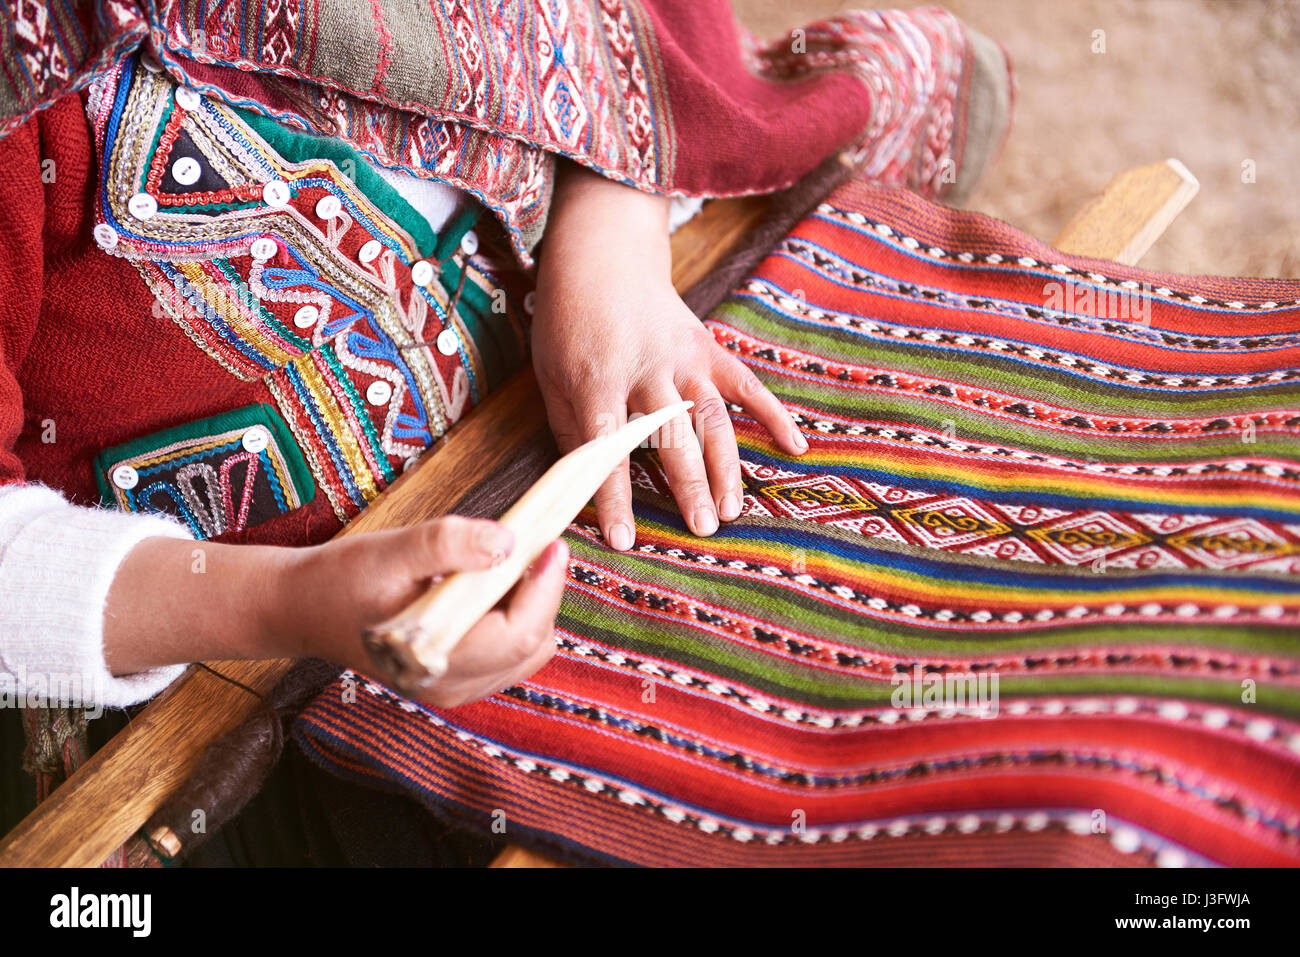 Handmade traditional colorful wool. Peru woman make alpaca textile close-up Stock Photo